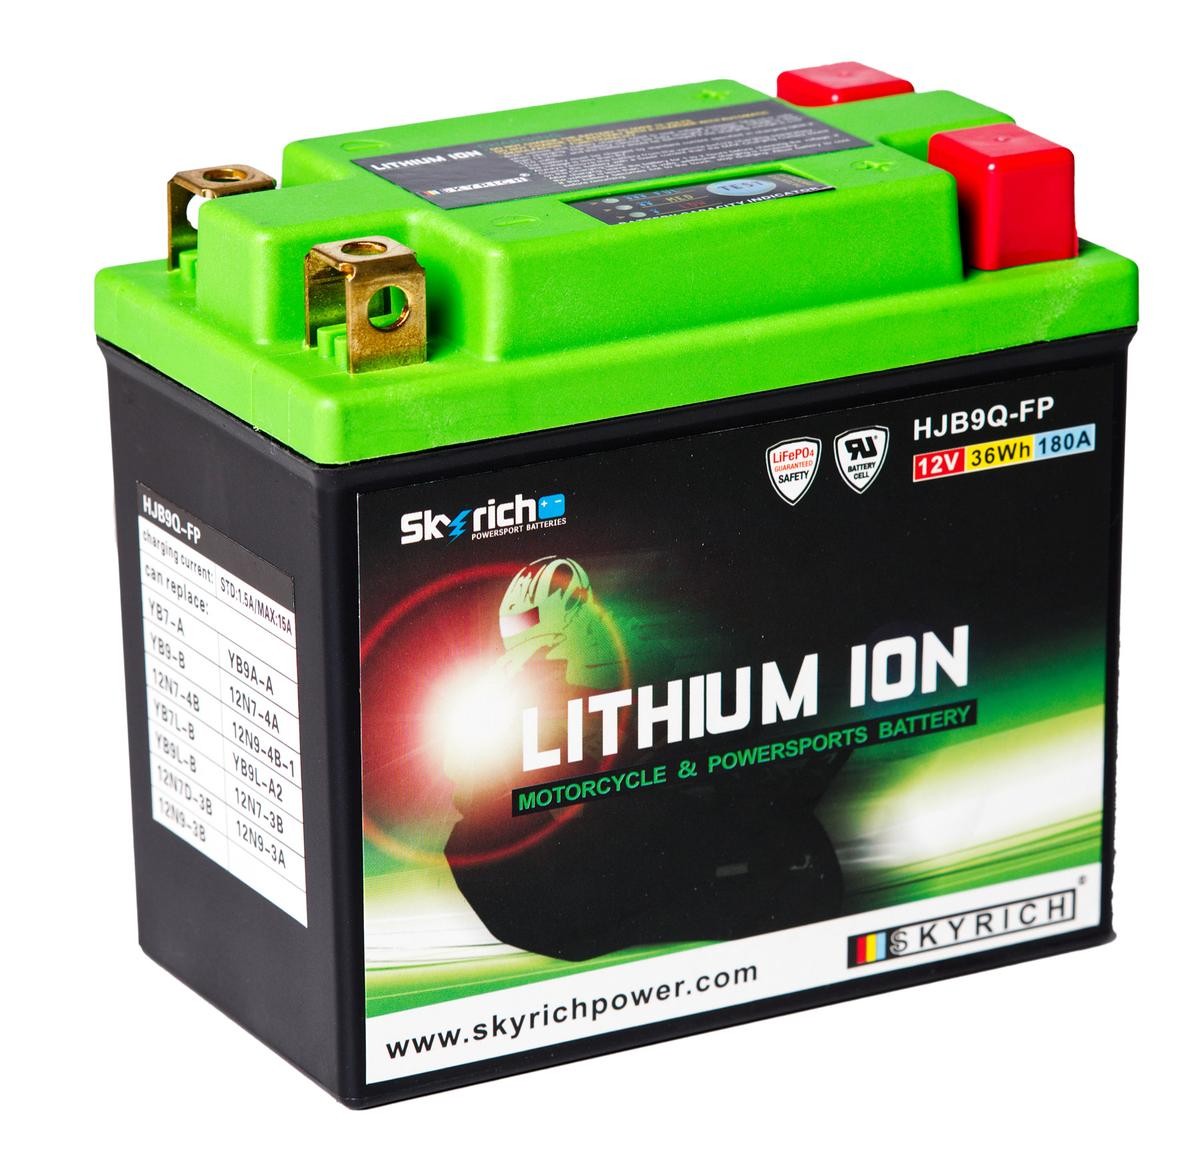 BENELLI 254 Batterie 12V 3Ah 180A N Li-Ionen-Batterie SKYRICH LITHIUM ION HJB9Q-FP